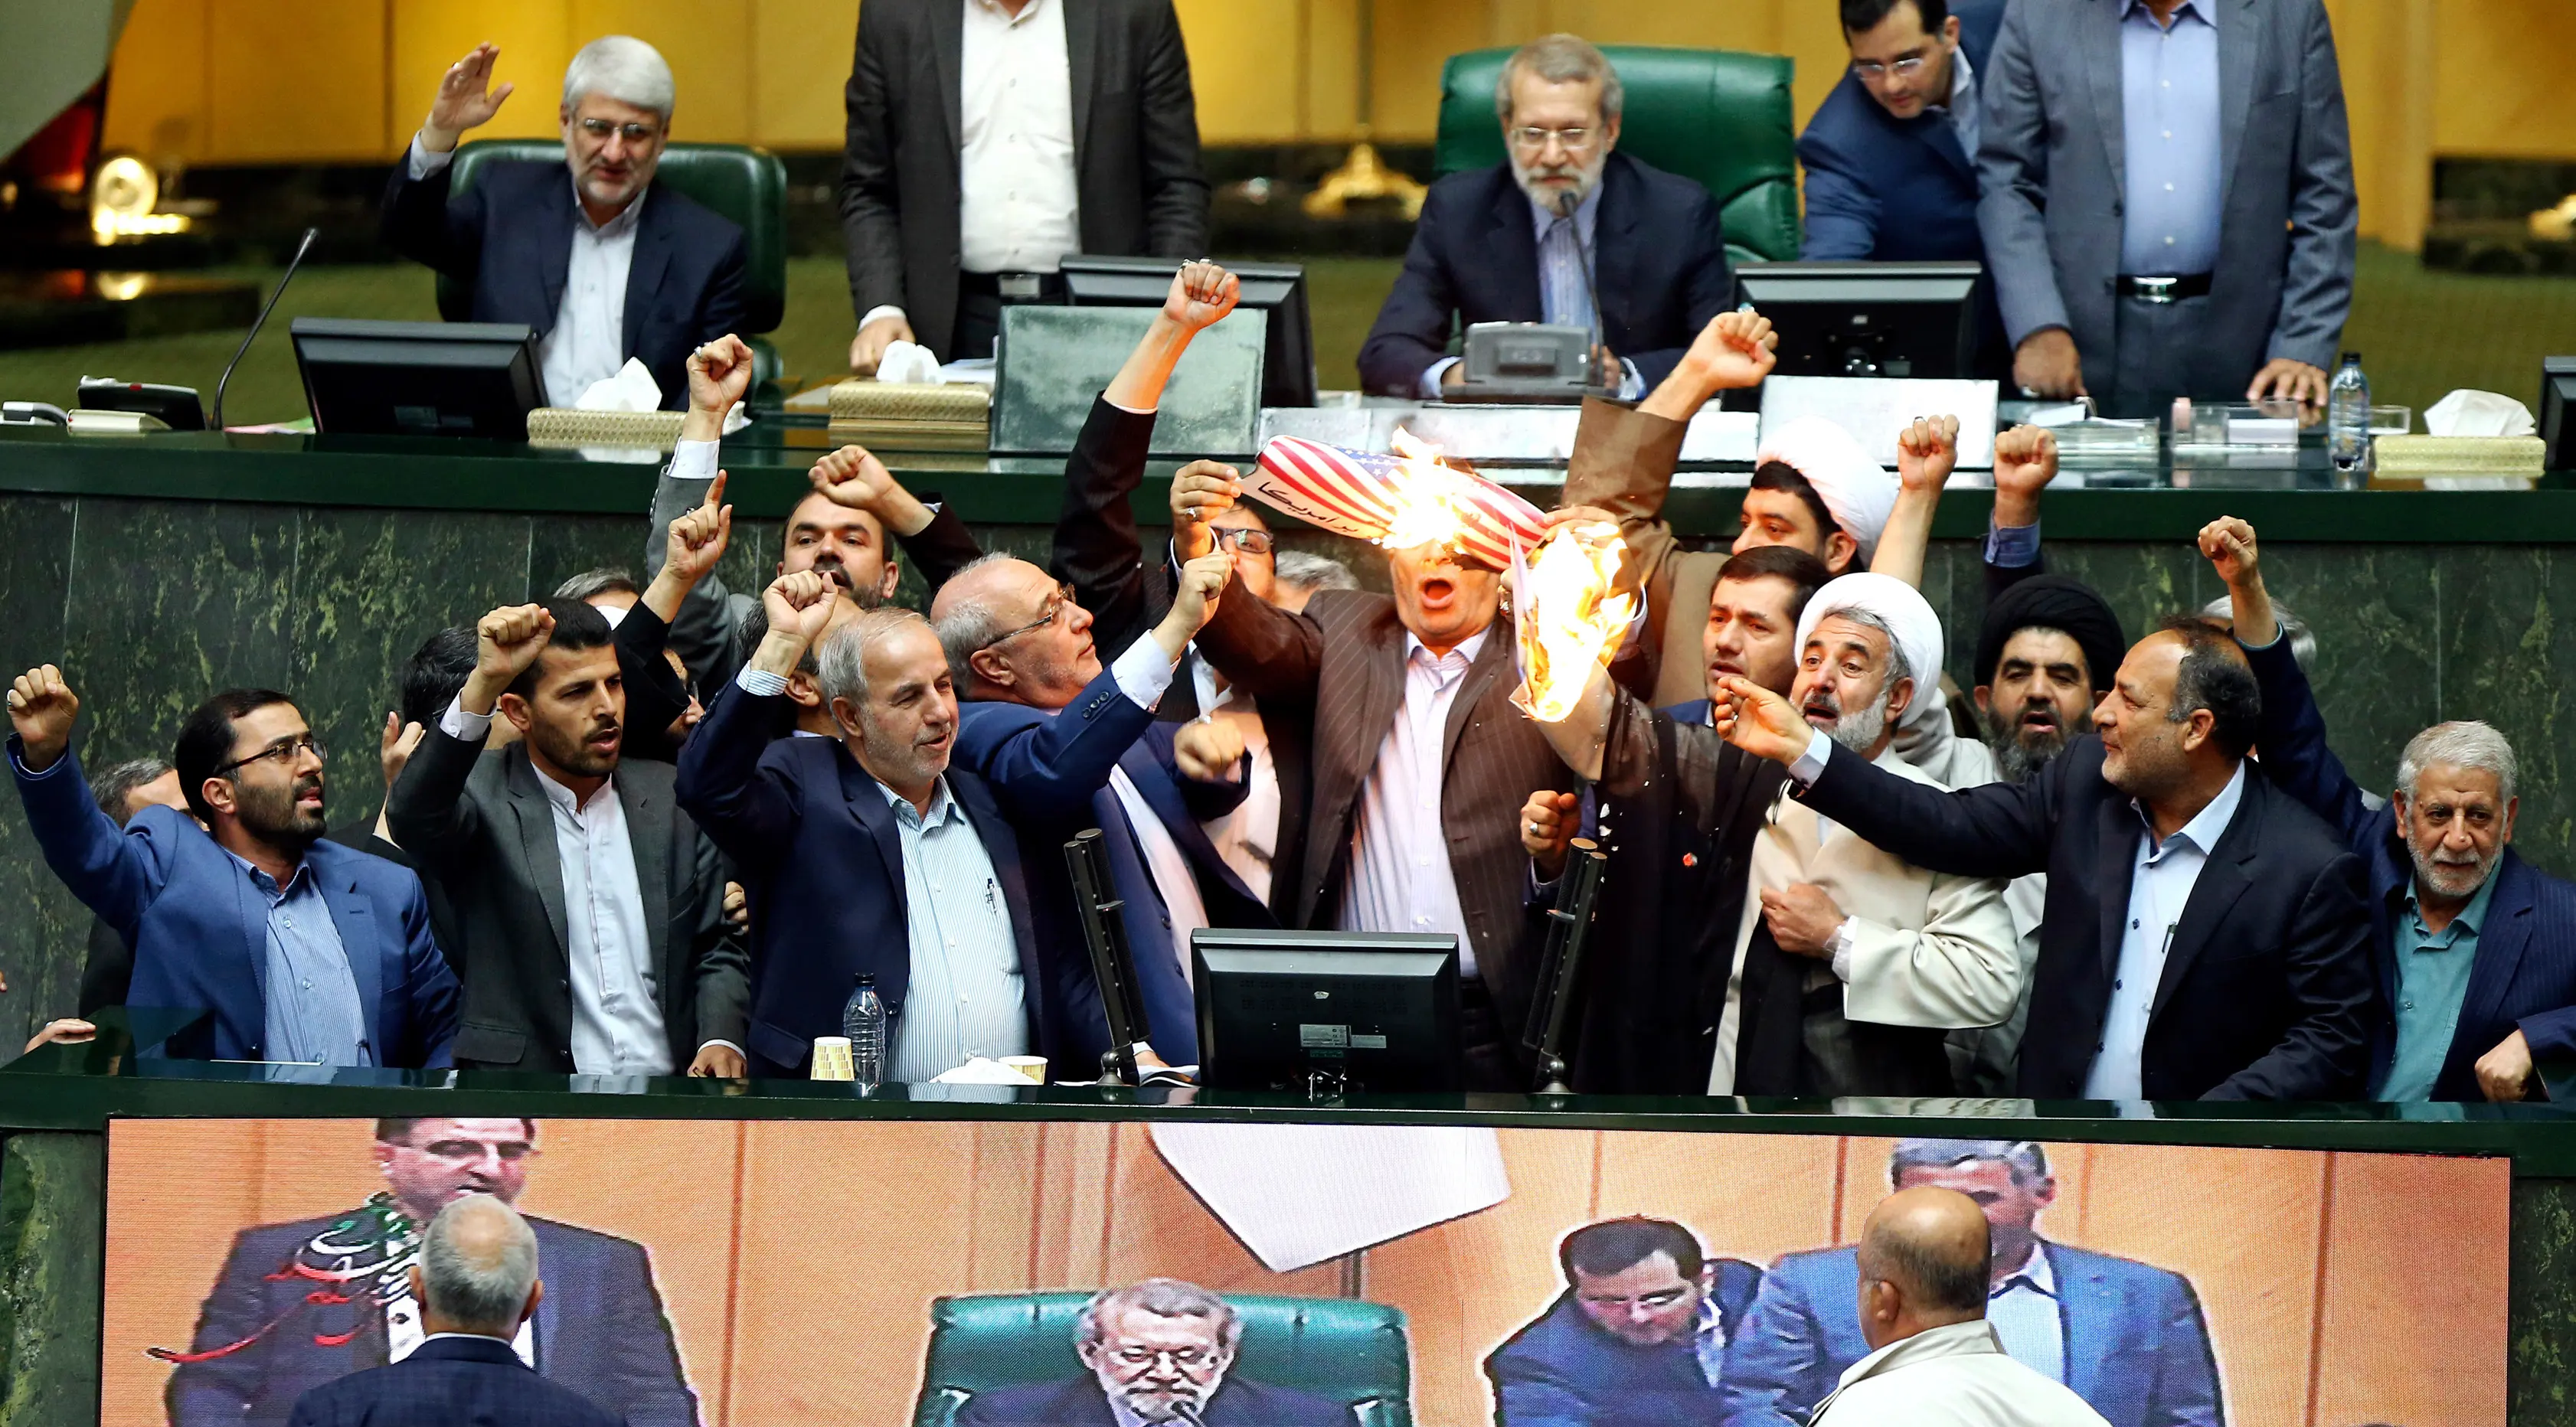 Anggota parlemen Iran membakar dua lembar kertas bergambar bendera AS, Teheran, Iran, Rabu (9/5). Aksi itu dilakukan sebagai kecaman atas kebijakan Presiden AS Donald Trump yang keluar dari kesepakatan nuklir Iran. (AP Photo)